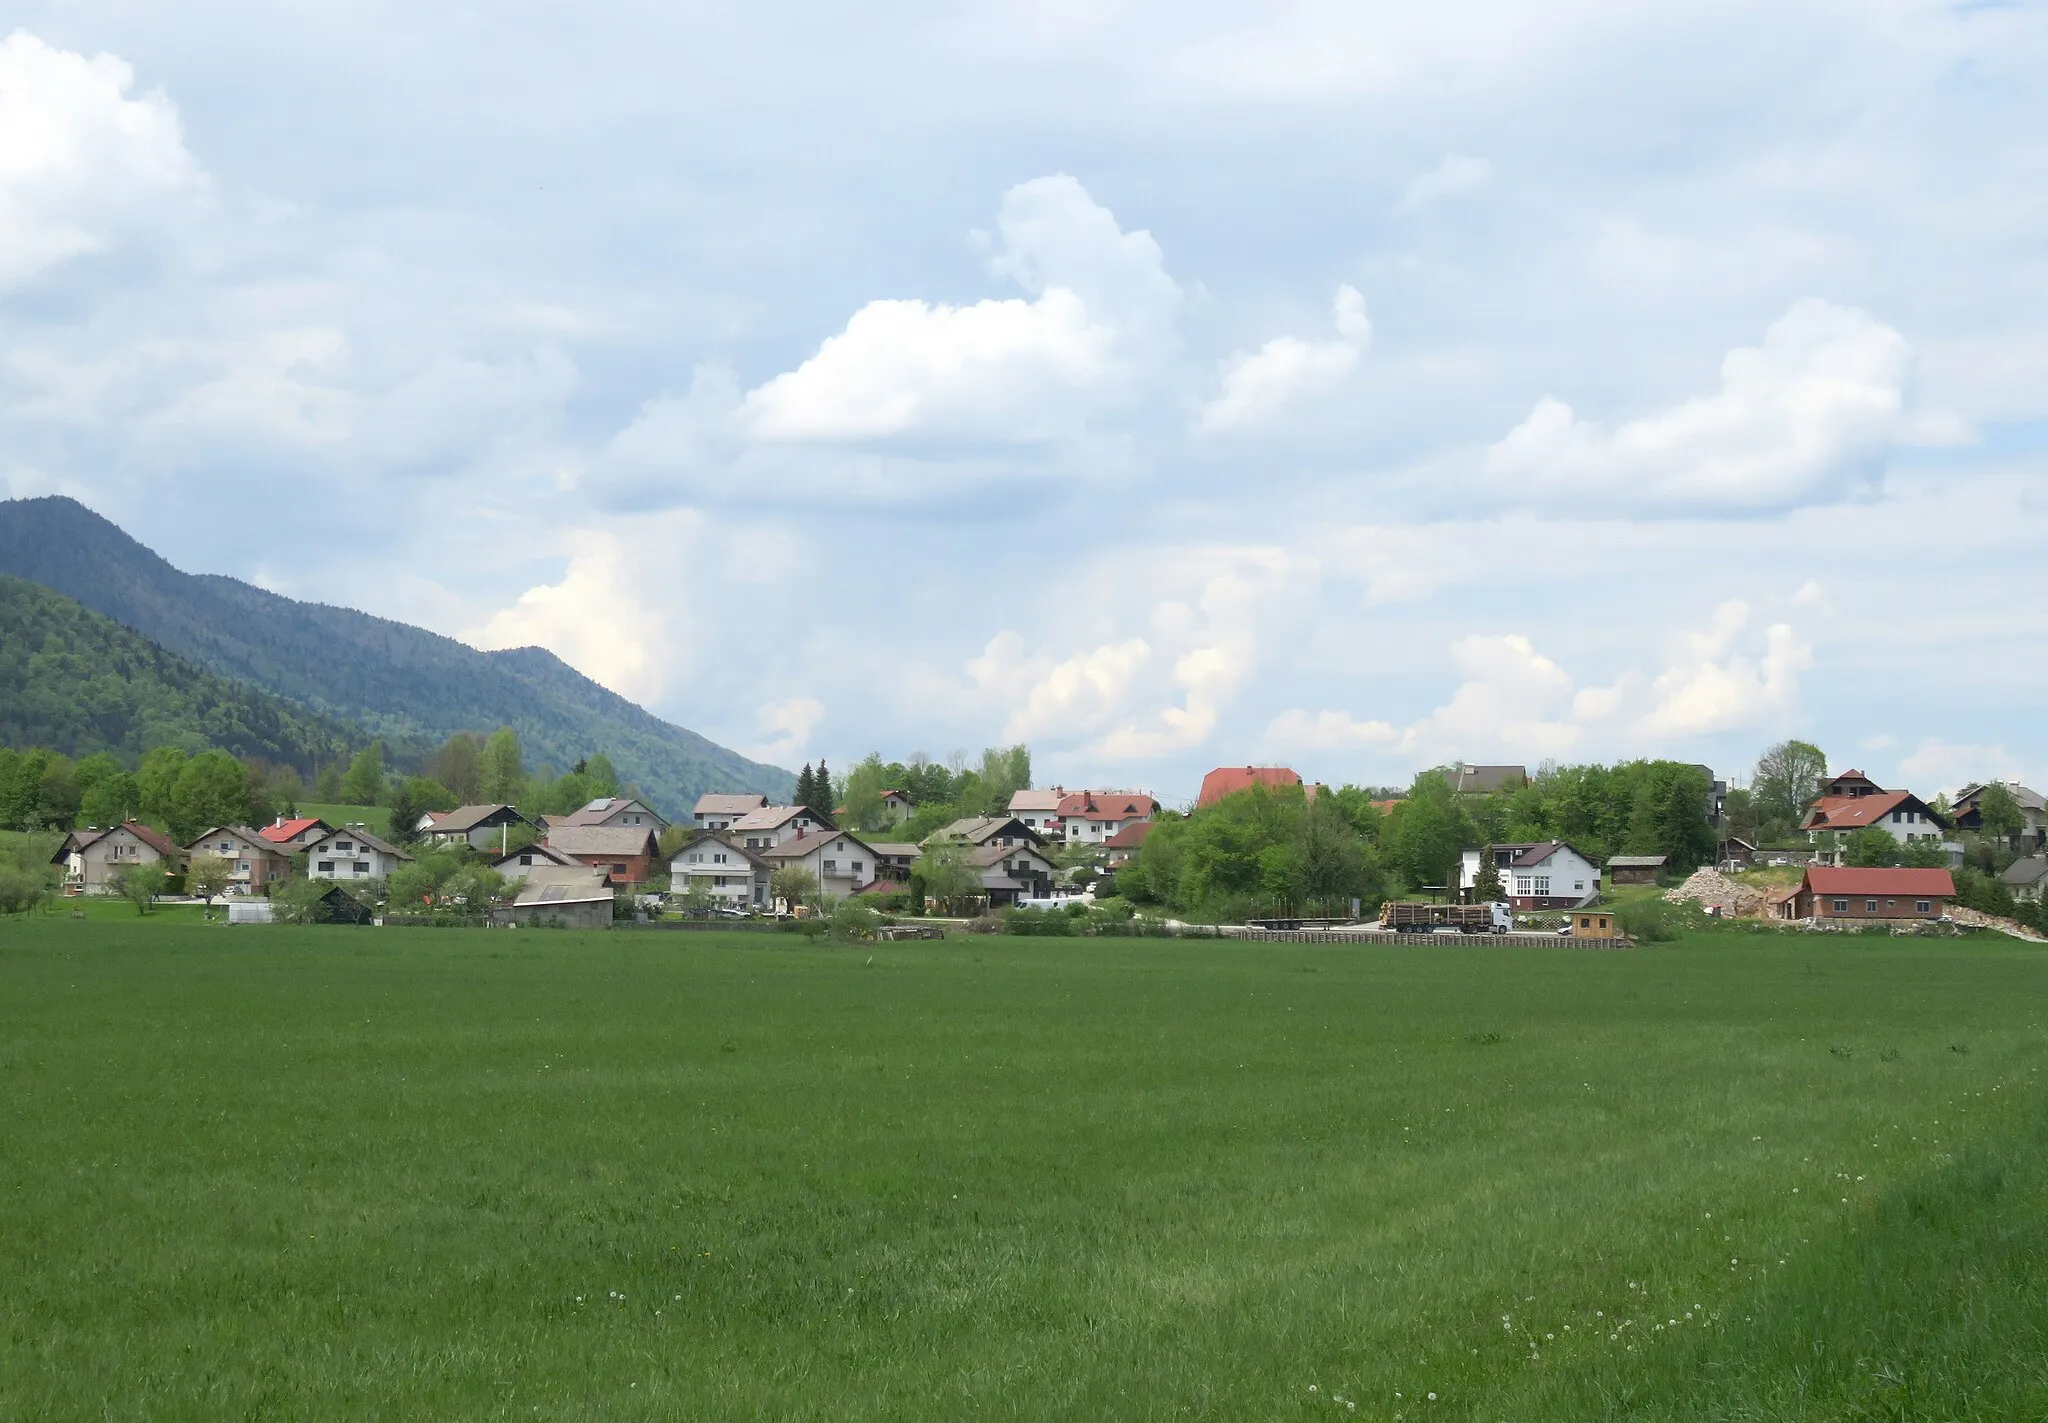 Photo showing: Dolenja Vas, Municipality of Ribnica, Slovenia